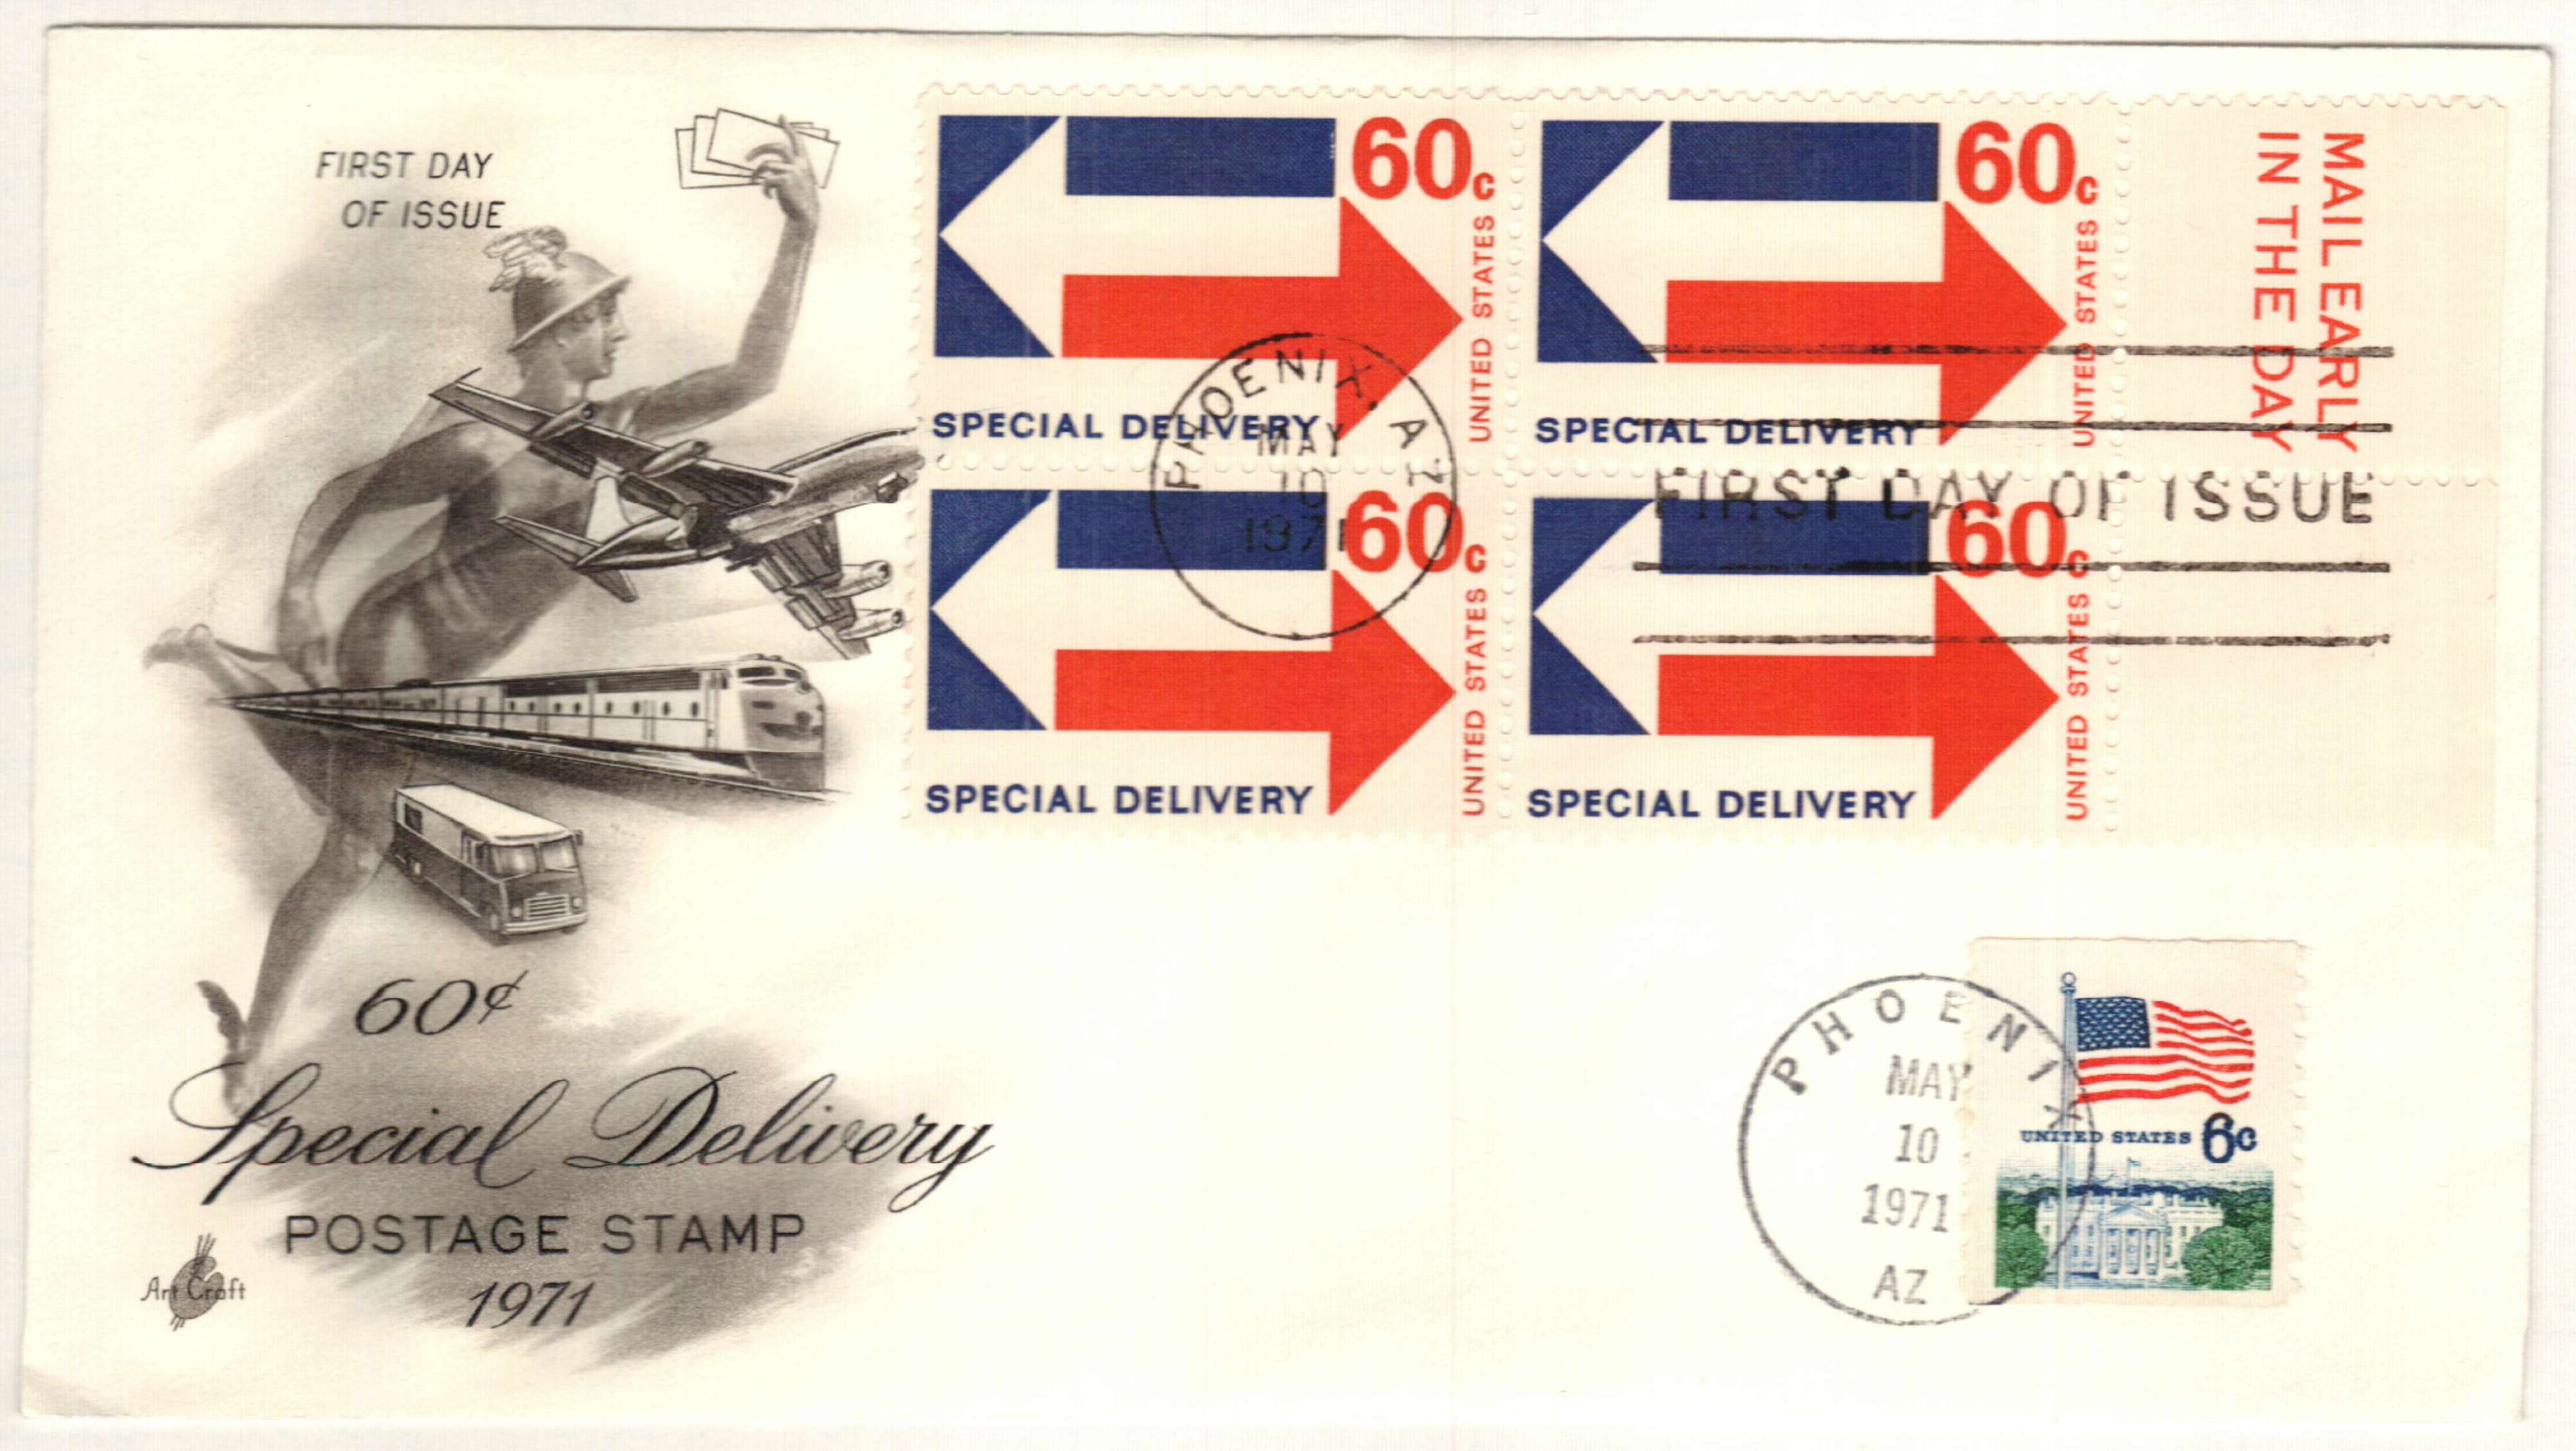 US Stamps #E1-E23 Complete SET Special Delivery Mint OG H/12nh LOT #82500